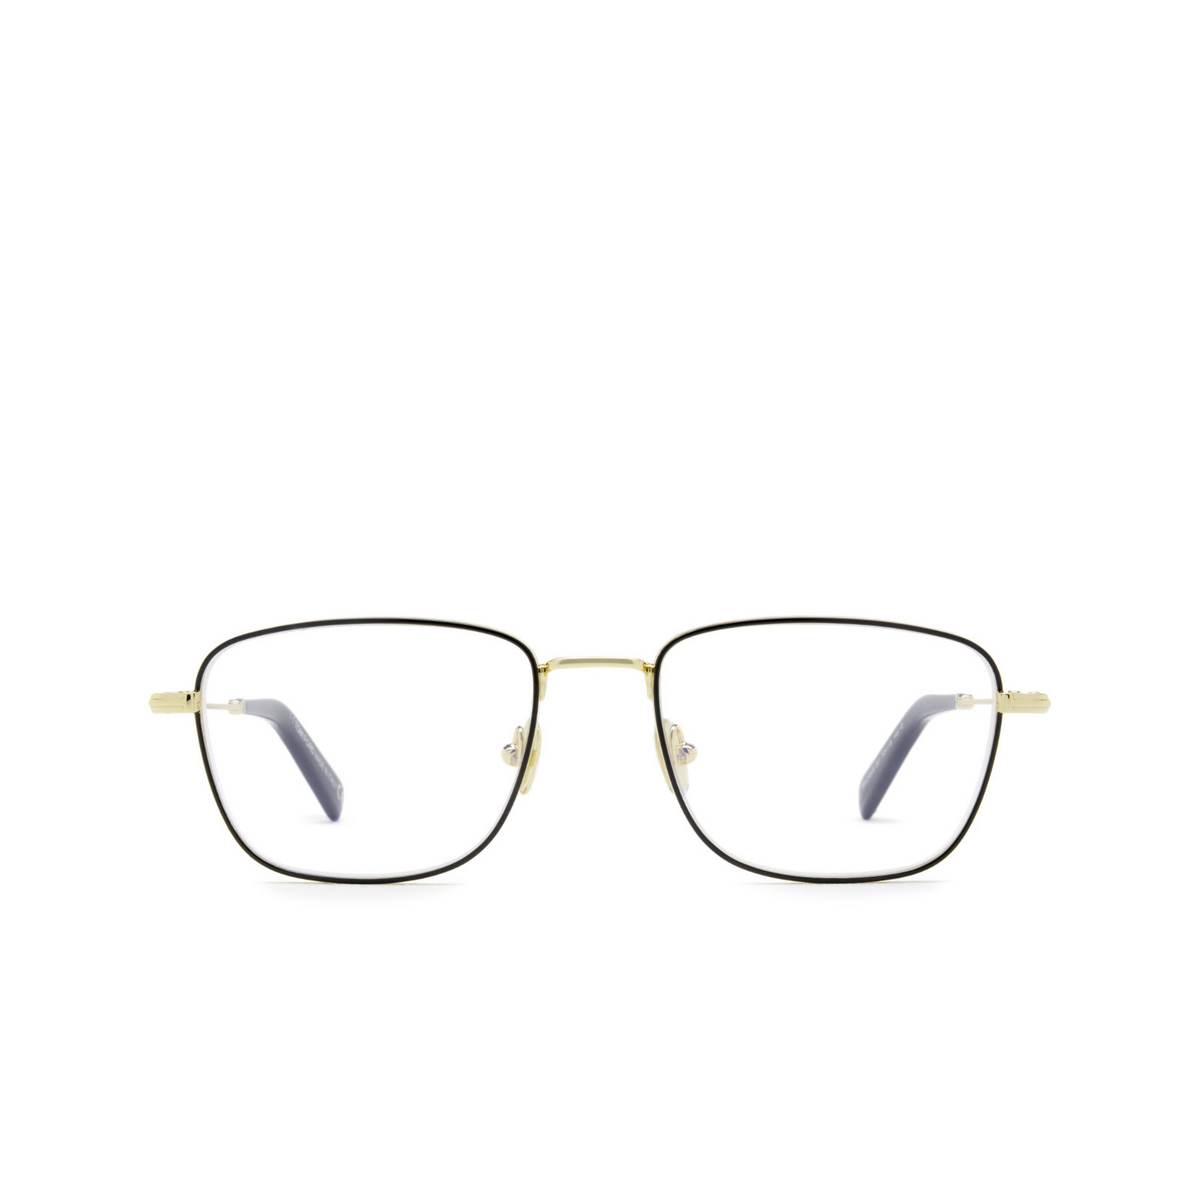 Tom Ford® Square Eyeglasses: FT5748-B color Gold & Black 001 - front view.